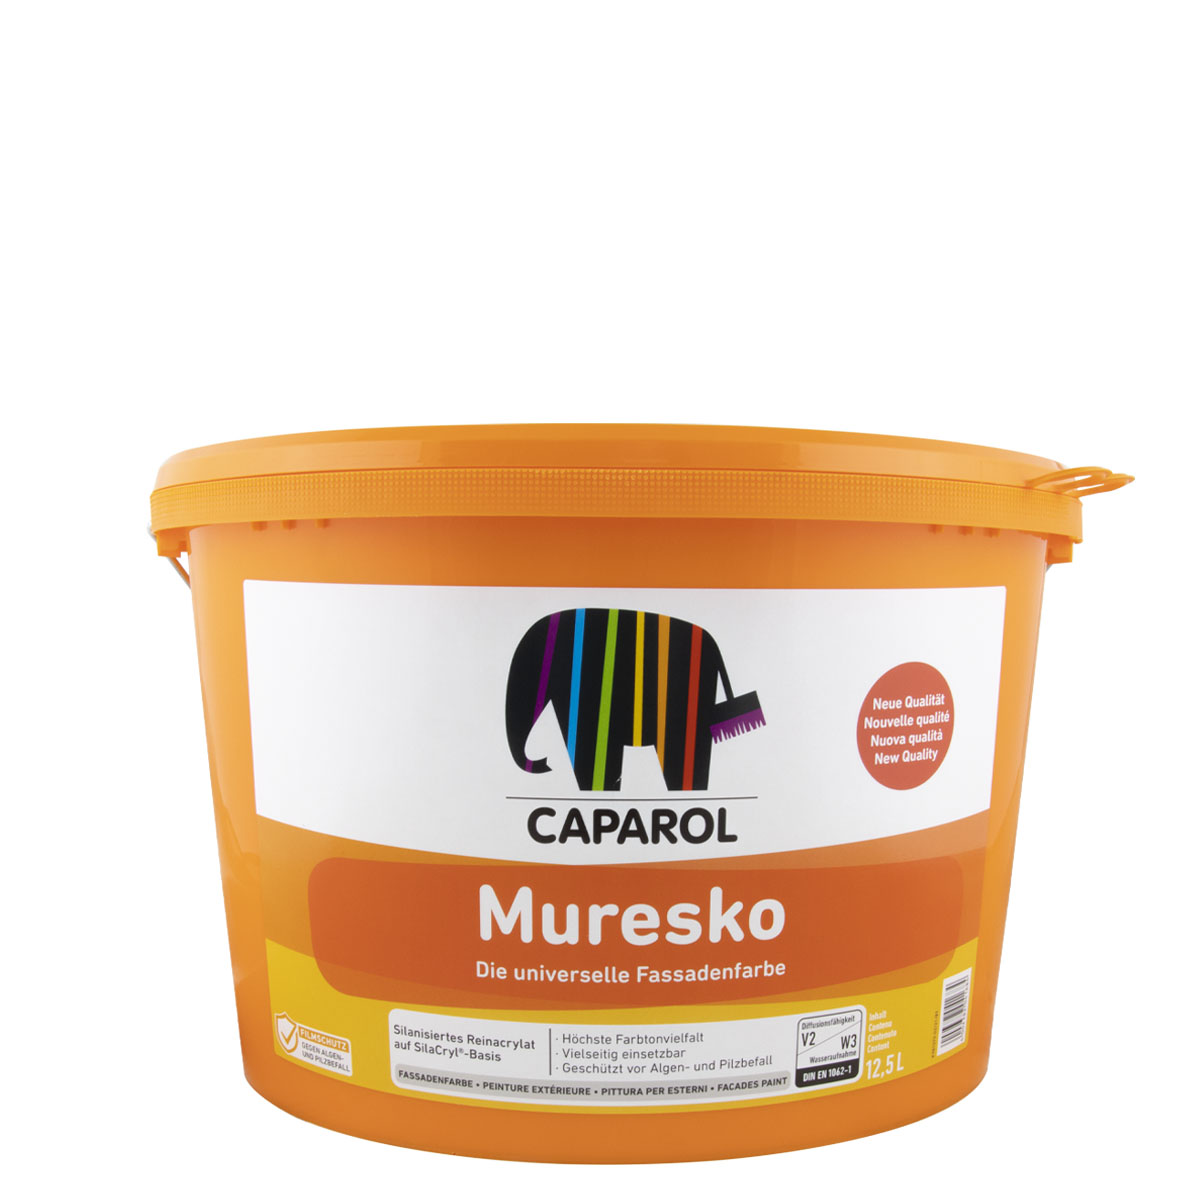 Caparol Muresko SilaCryl 12,5L weiss ,Fassadenfarbe